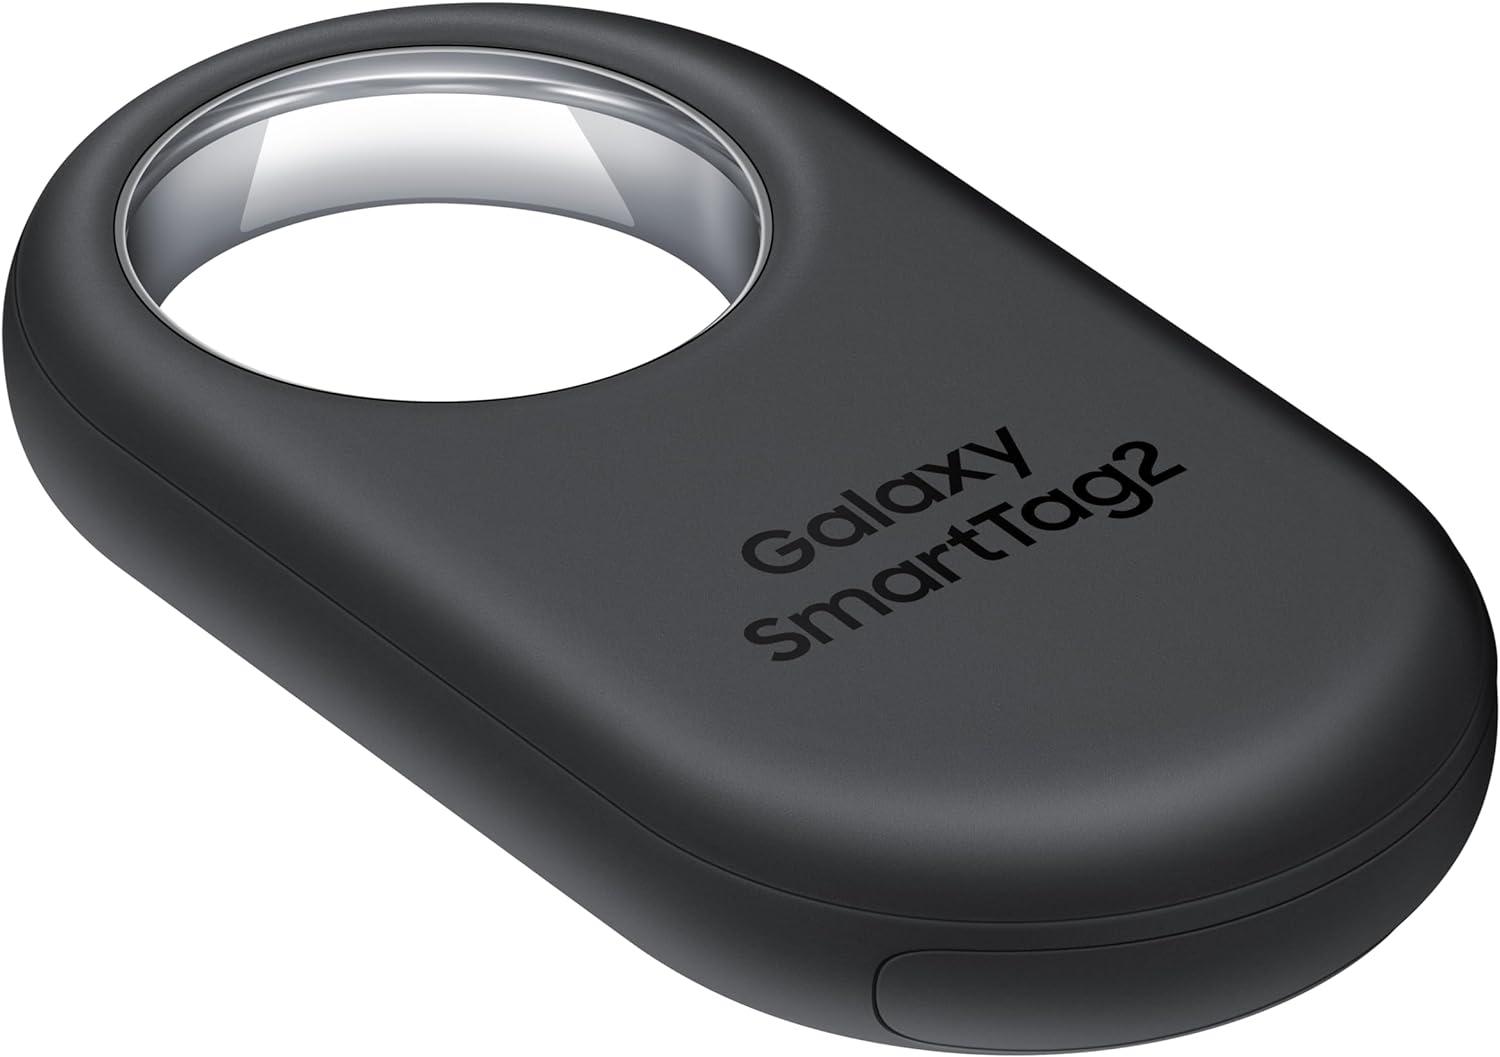 Samsung Galaxy SmartTag2 Bluetooth Locator Tracking Device for $23.99